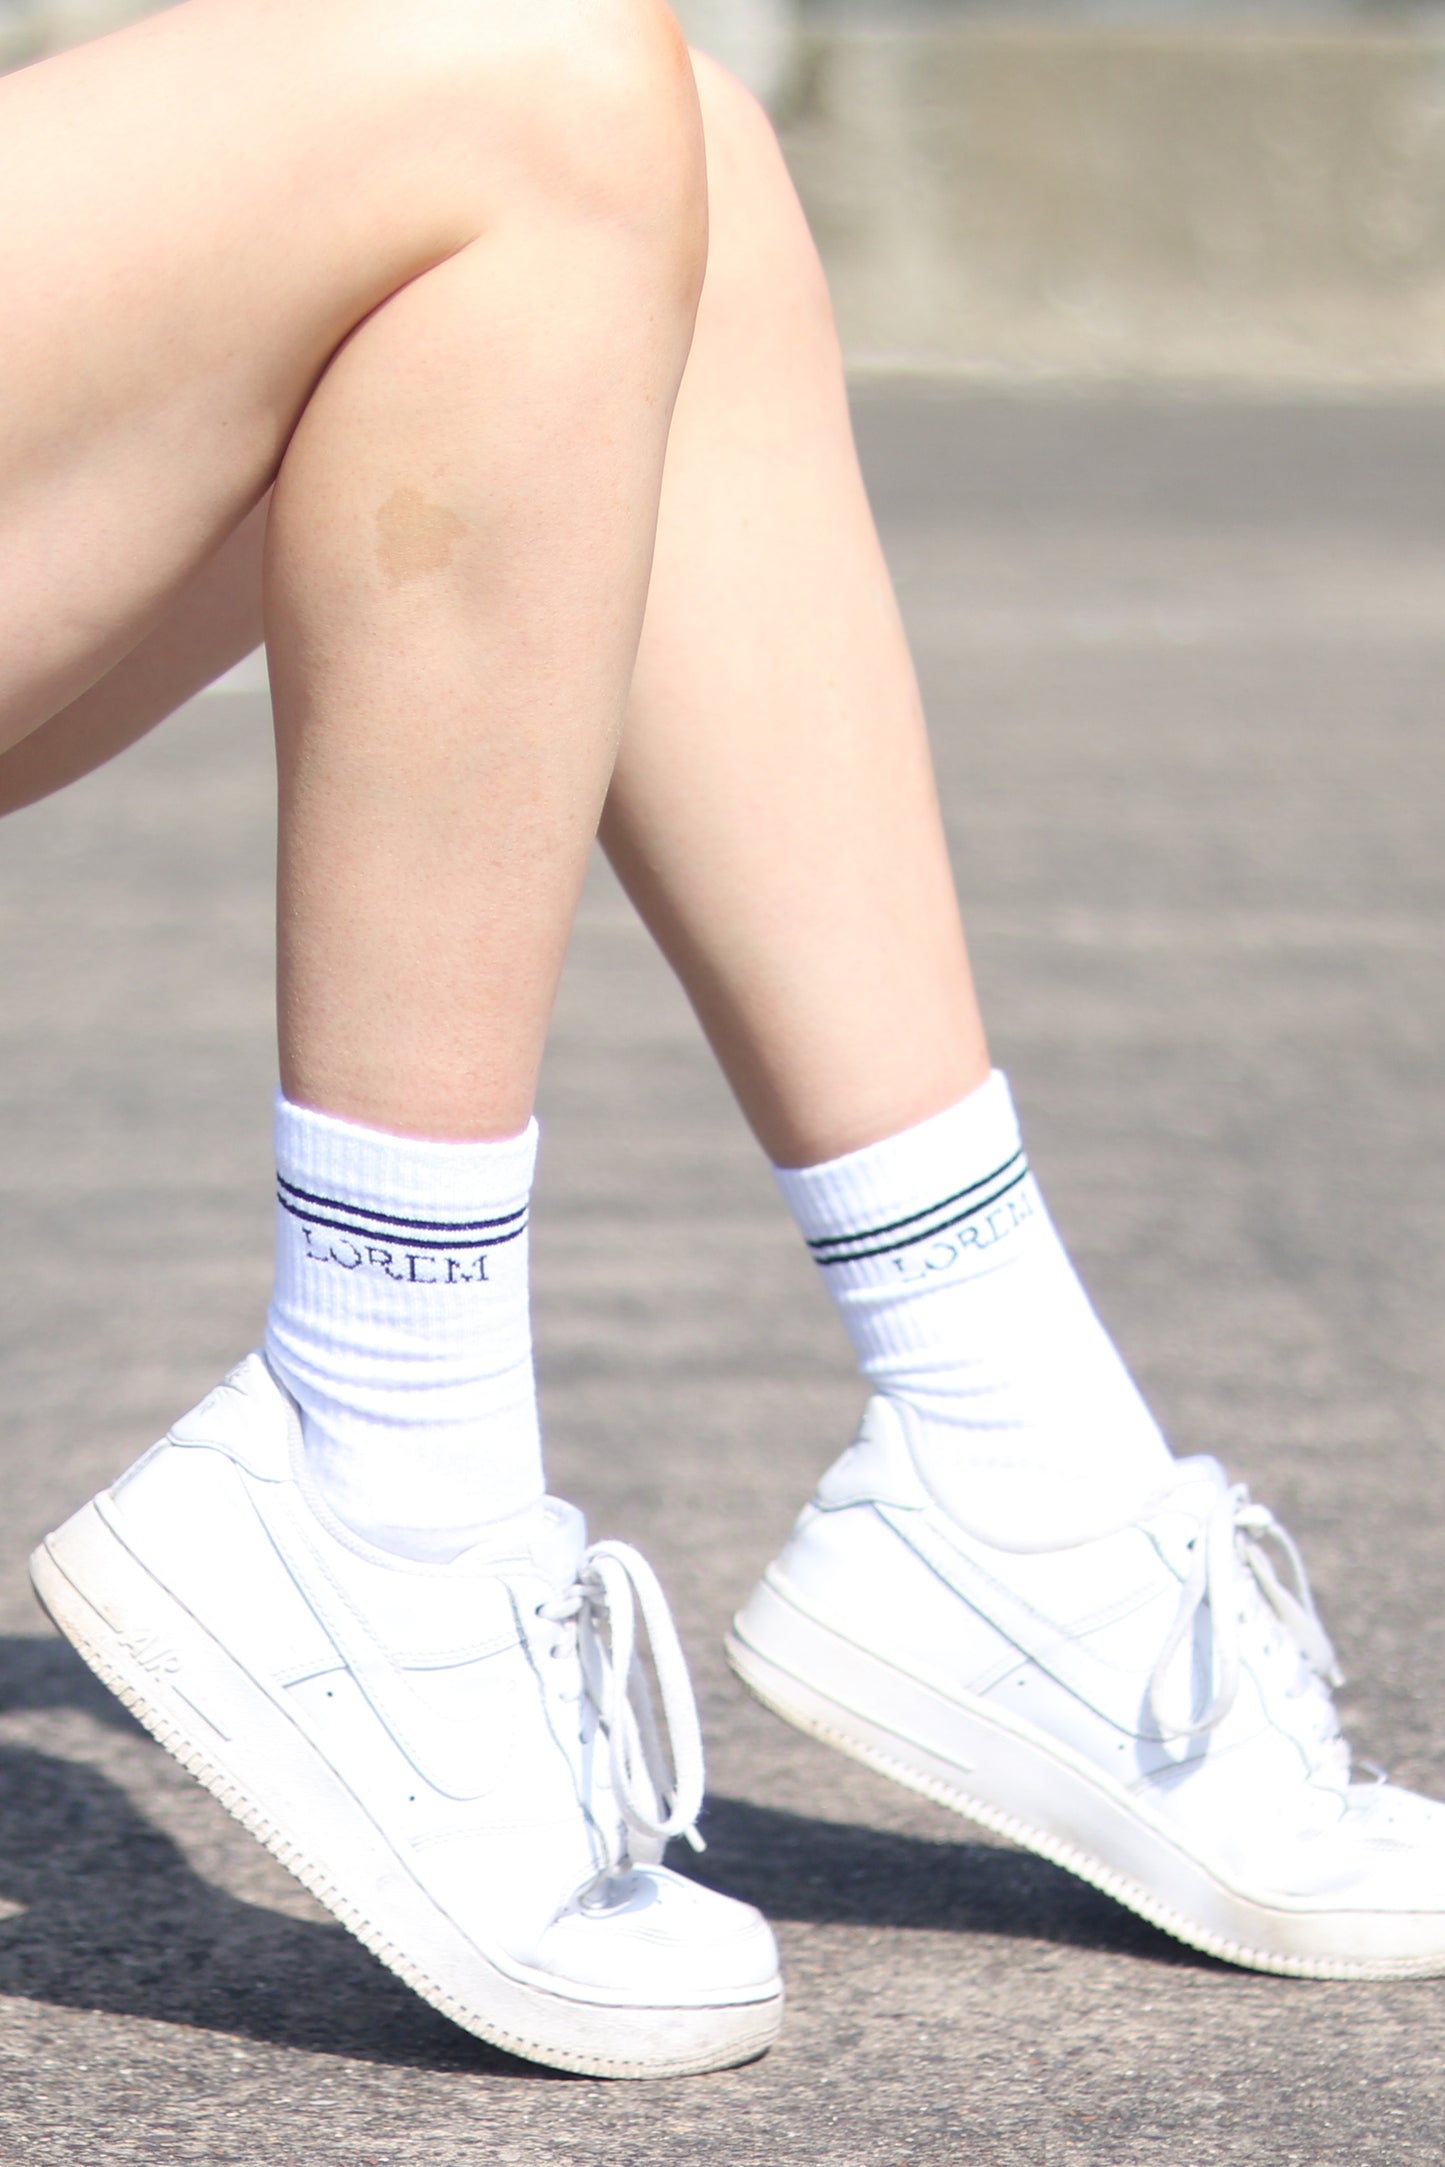 Hydrocycled® Cotton Sports Socks